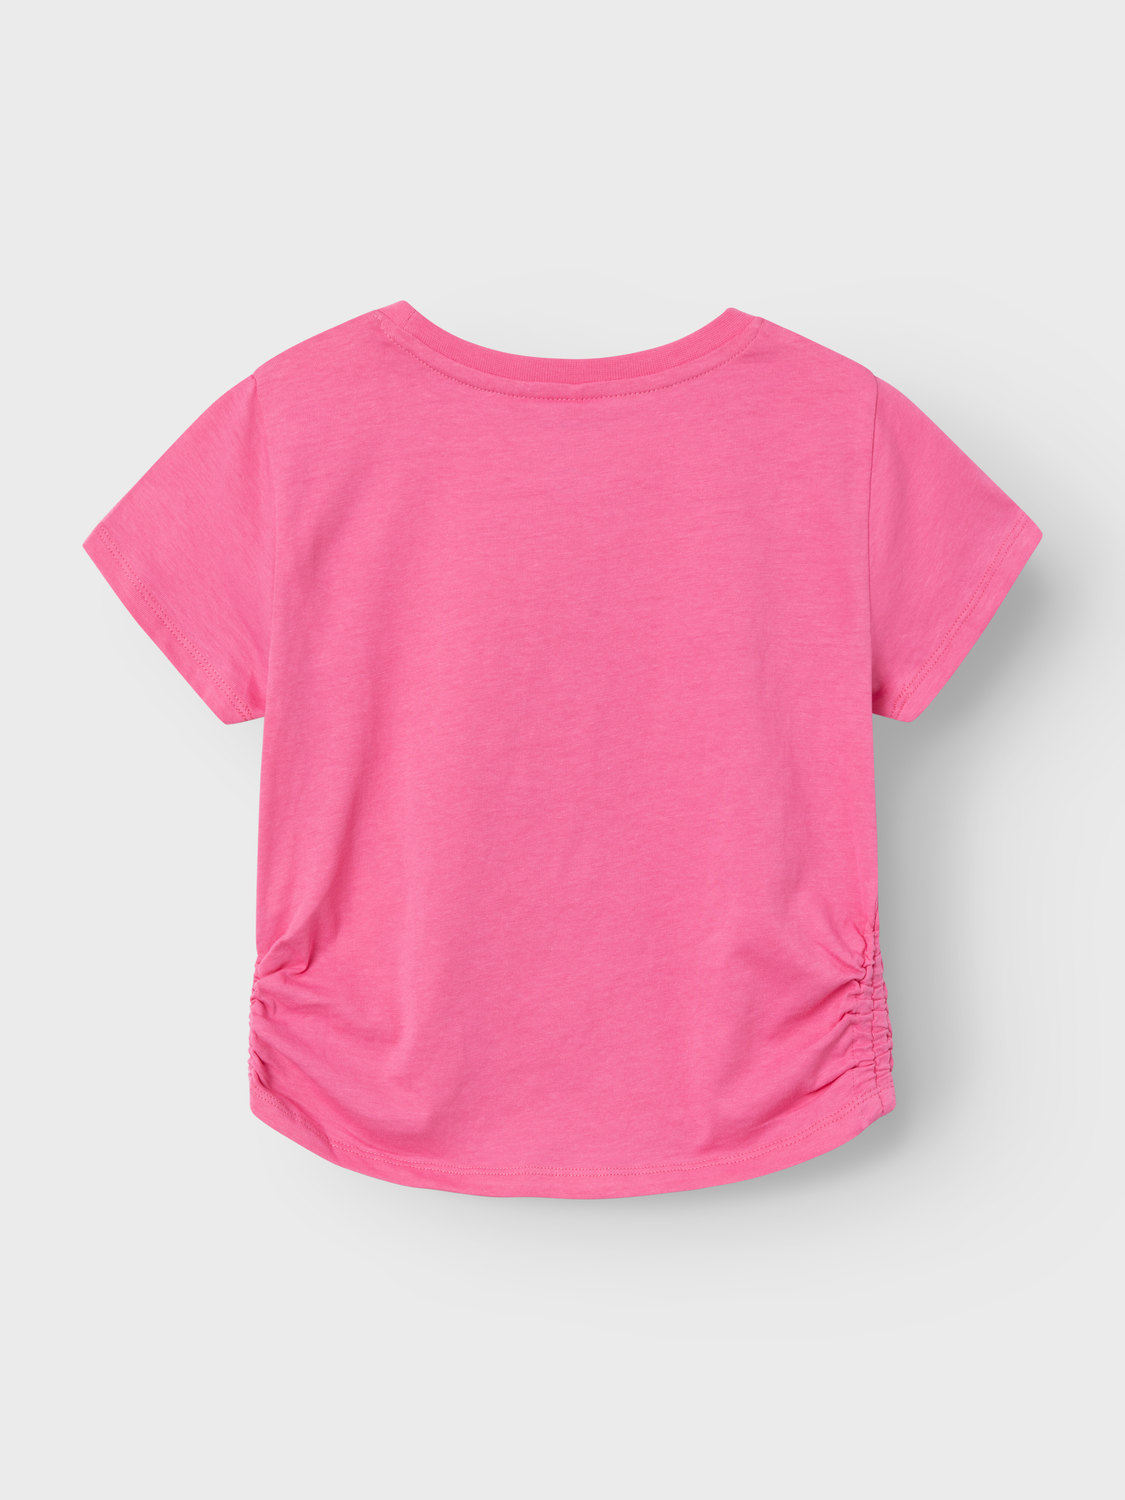 NKFJAMAIL T-Shirts & Tops - Pink Power